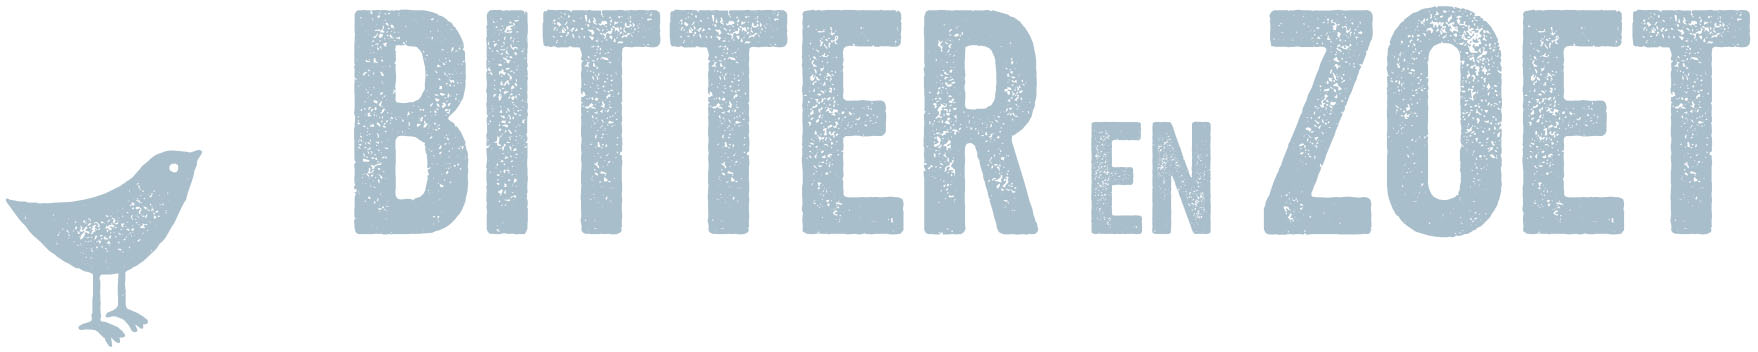 Bitterzoet Logo